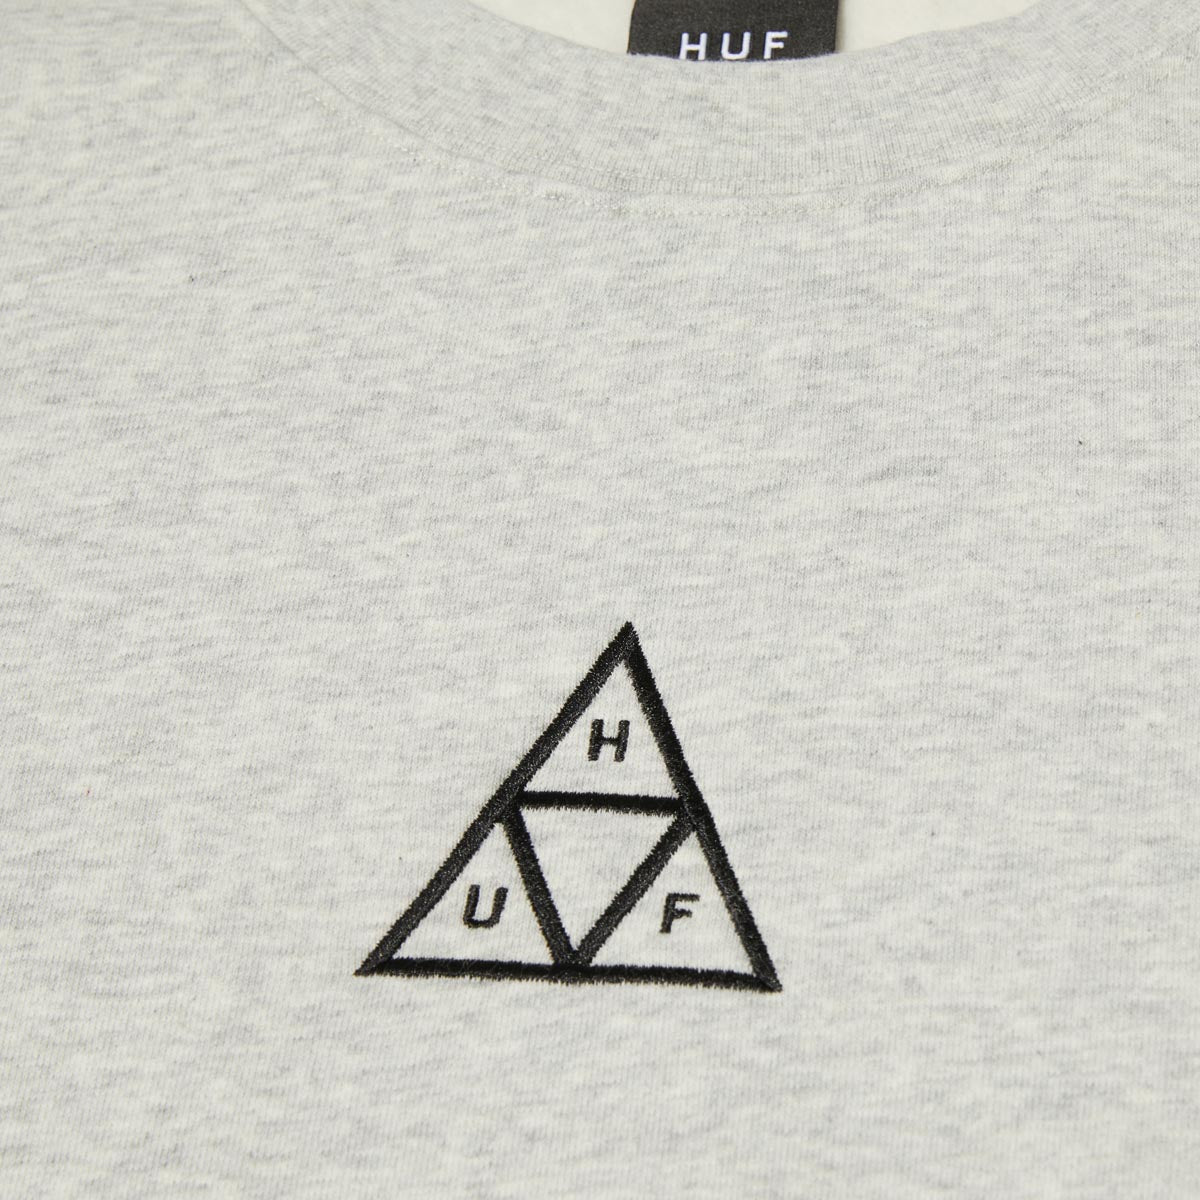 HUF Set Triple Triangle Crewneck Sweatshirt - Heather Grey image 2